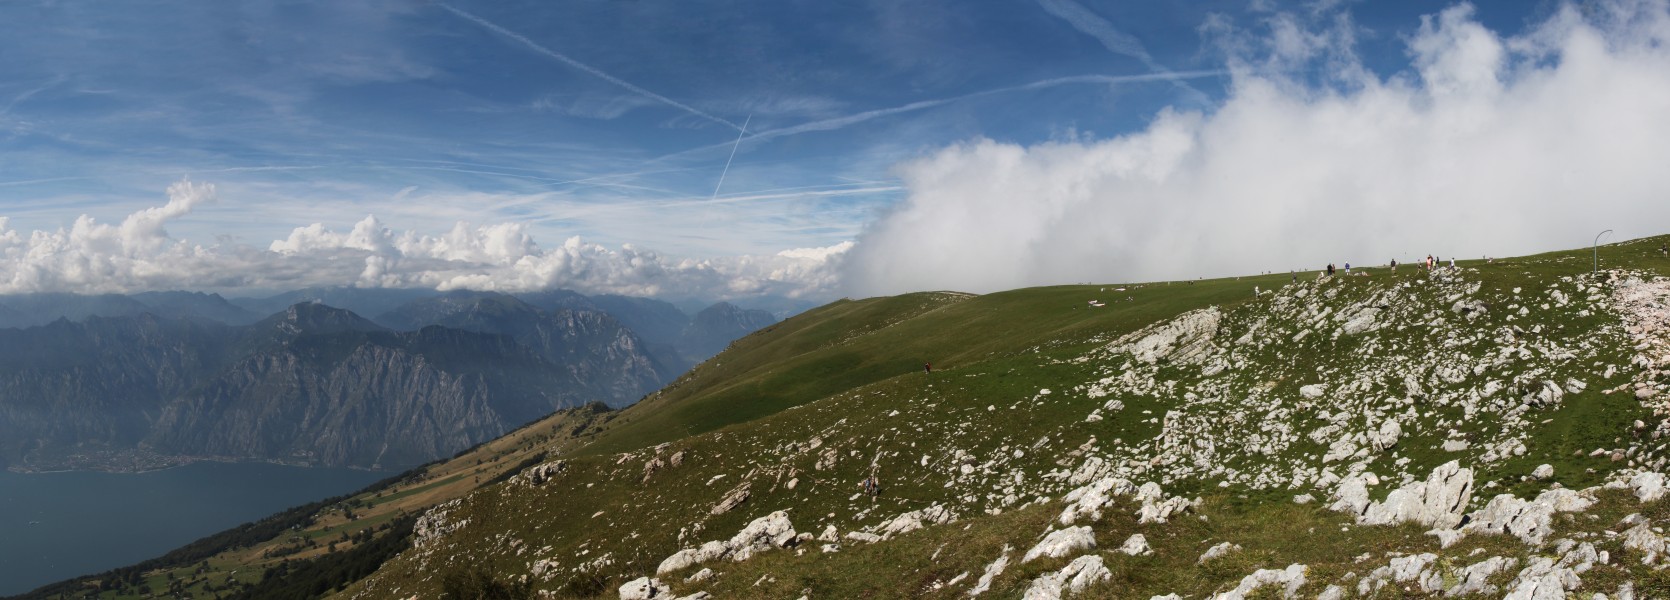 Monte Baldo - Panorama with cloud